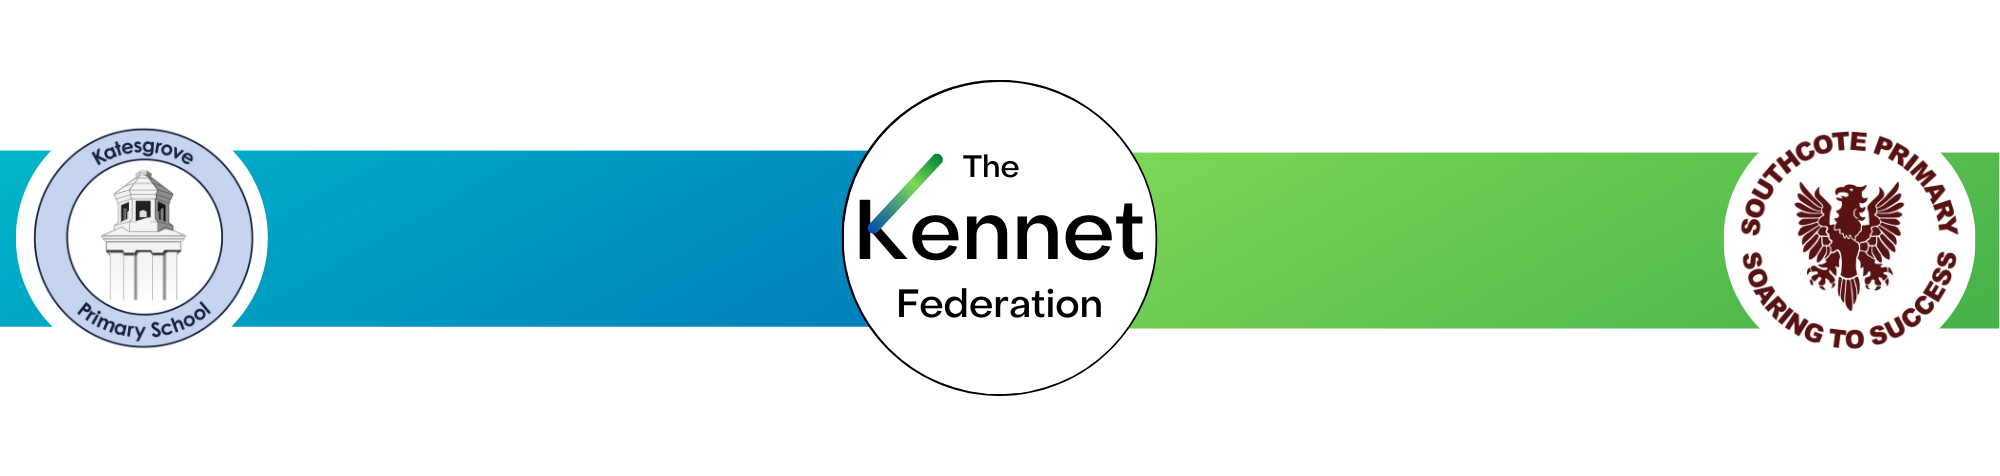 The Kennet Federation Logo